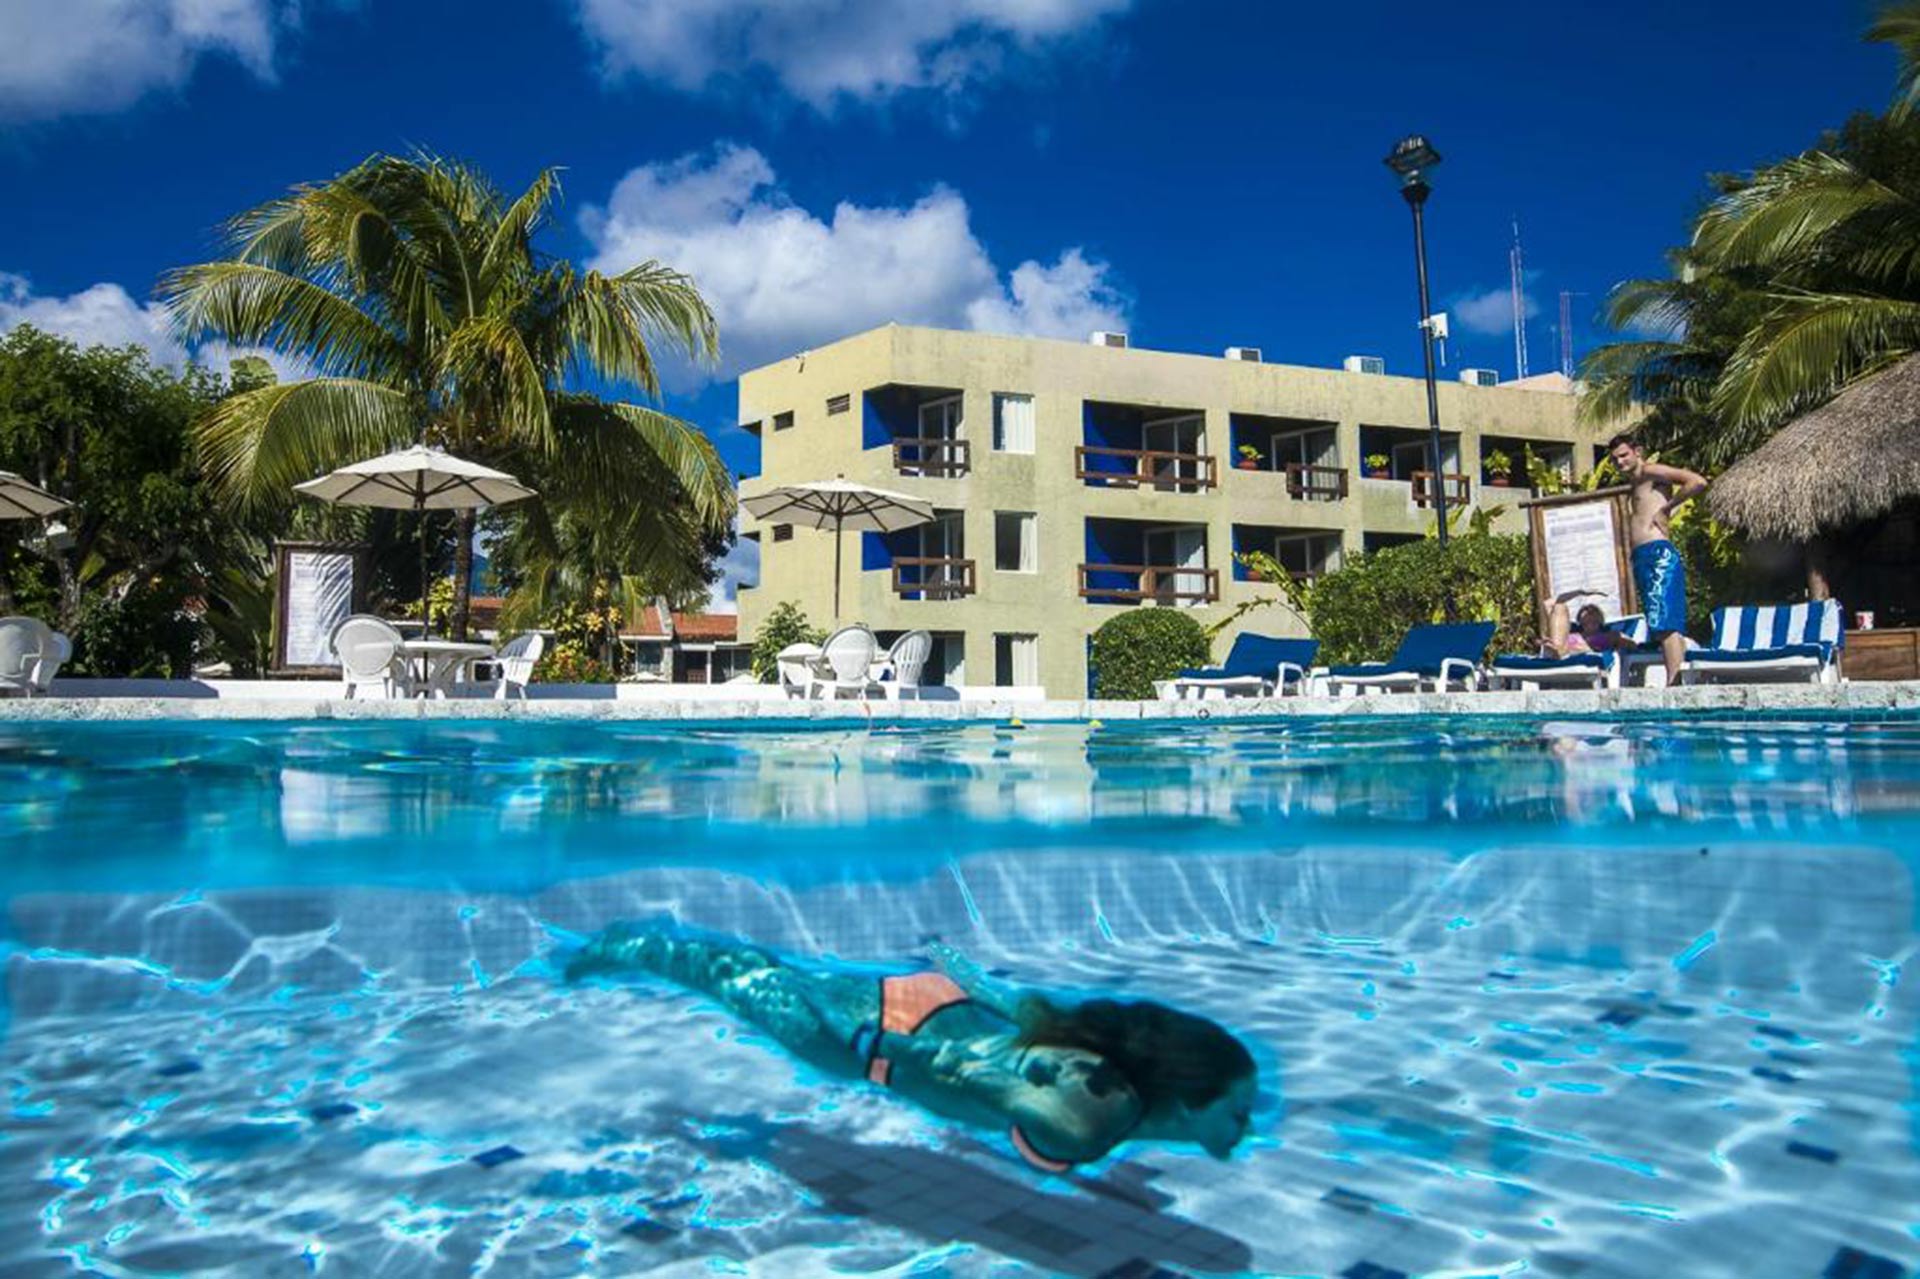 The pool at Casa del Mar Cozumel Hotel & Dive Resort